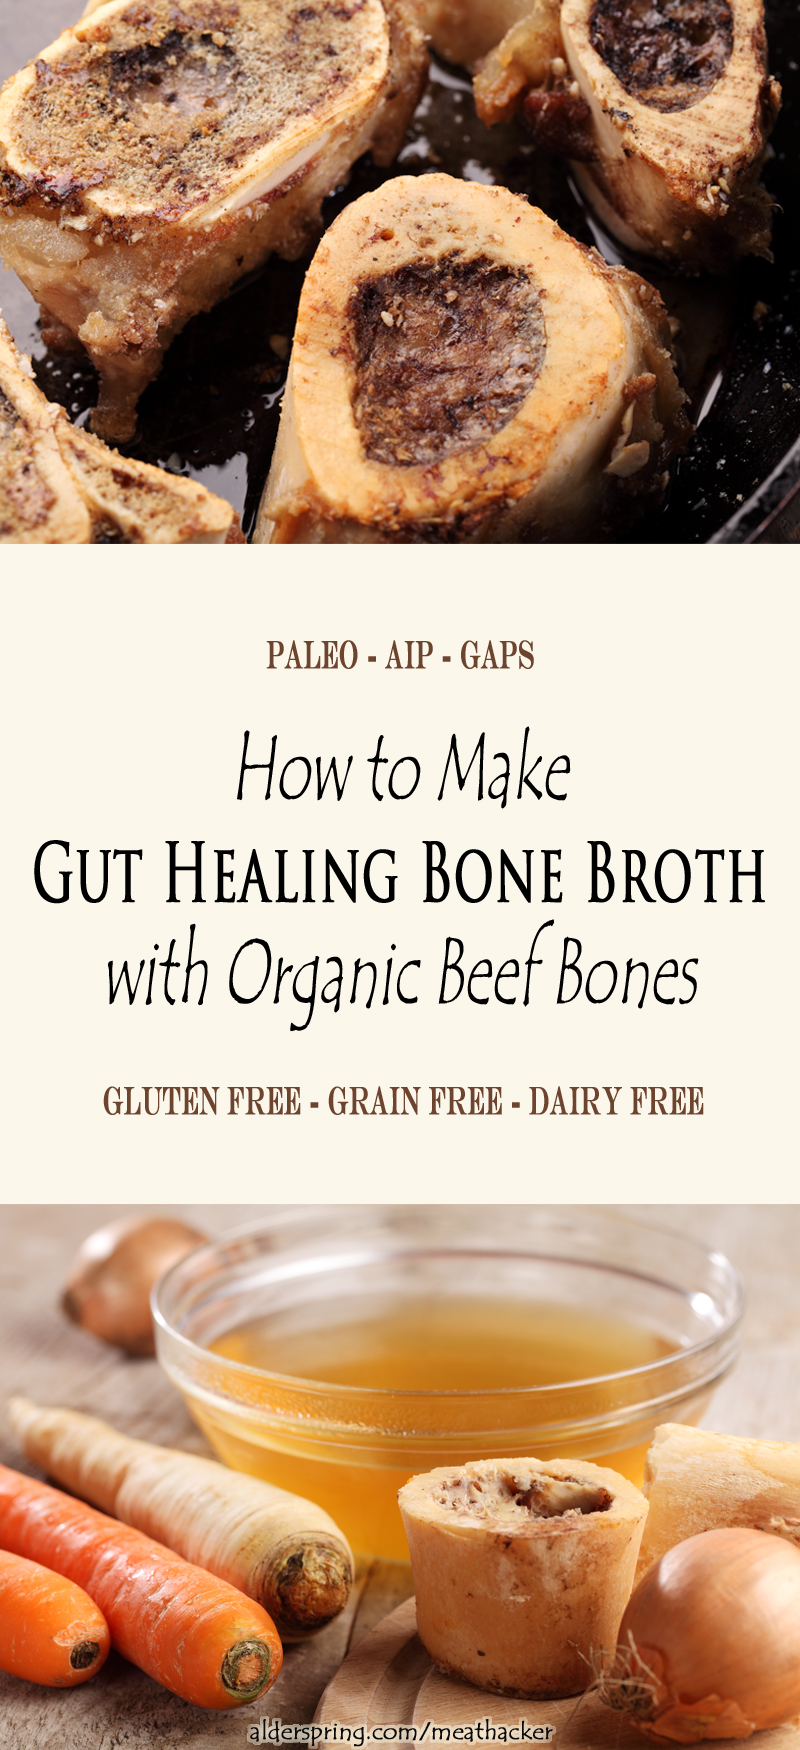 How to Make Gut Healing Bone Broth with Organic Beef Bones